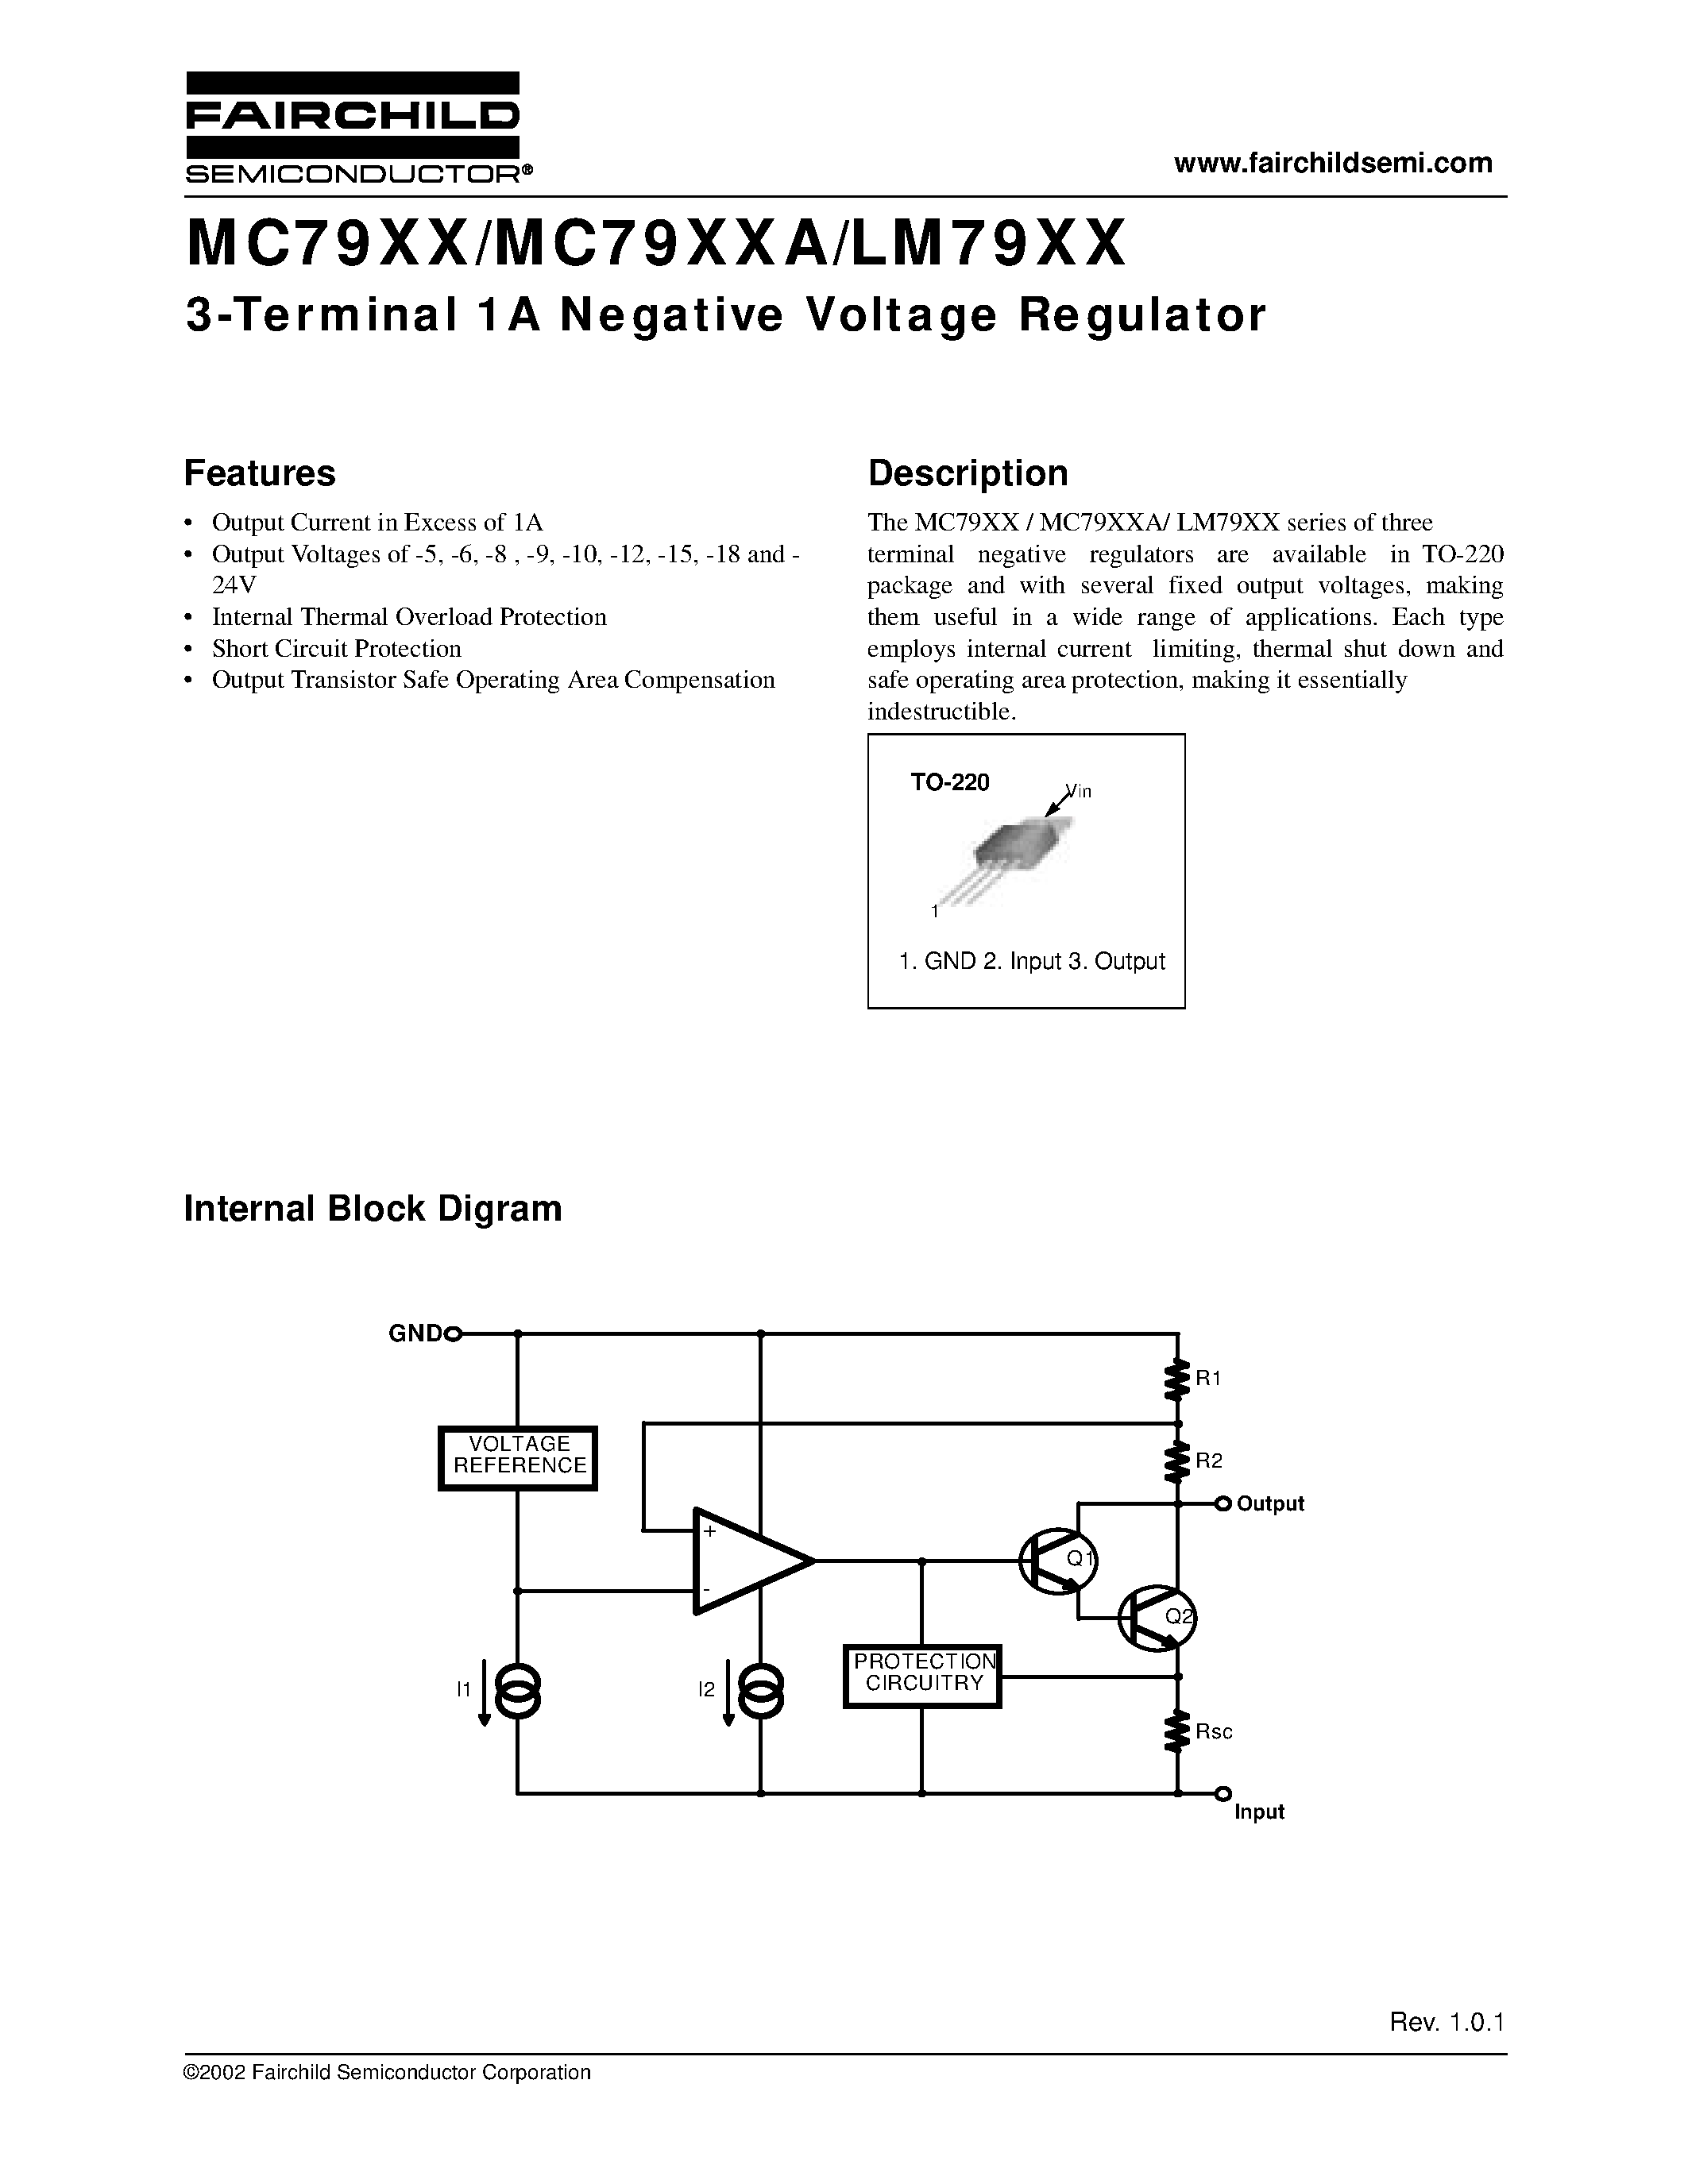 Datasheet MC7905A - 3-Terminal 1A Negative Voltage Regulator page 1